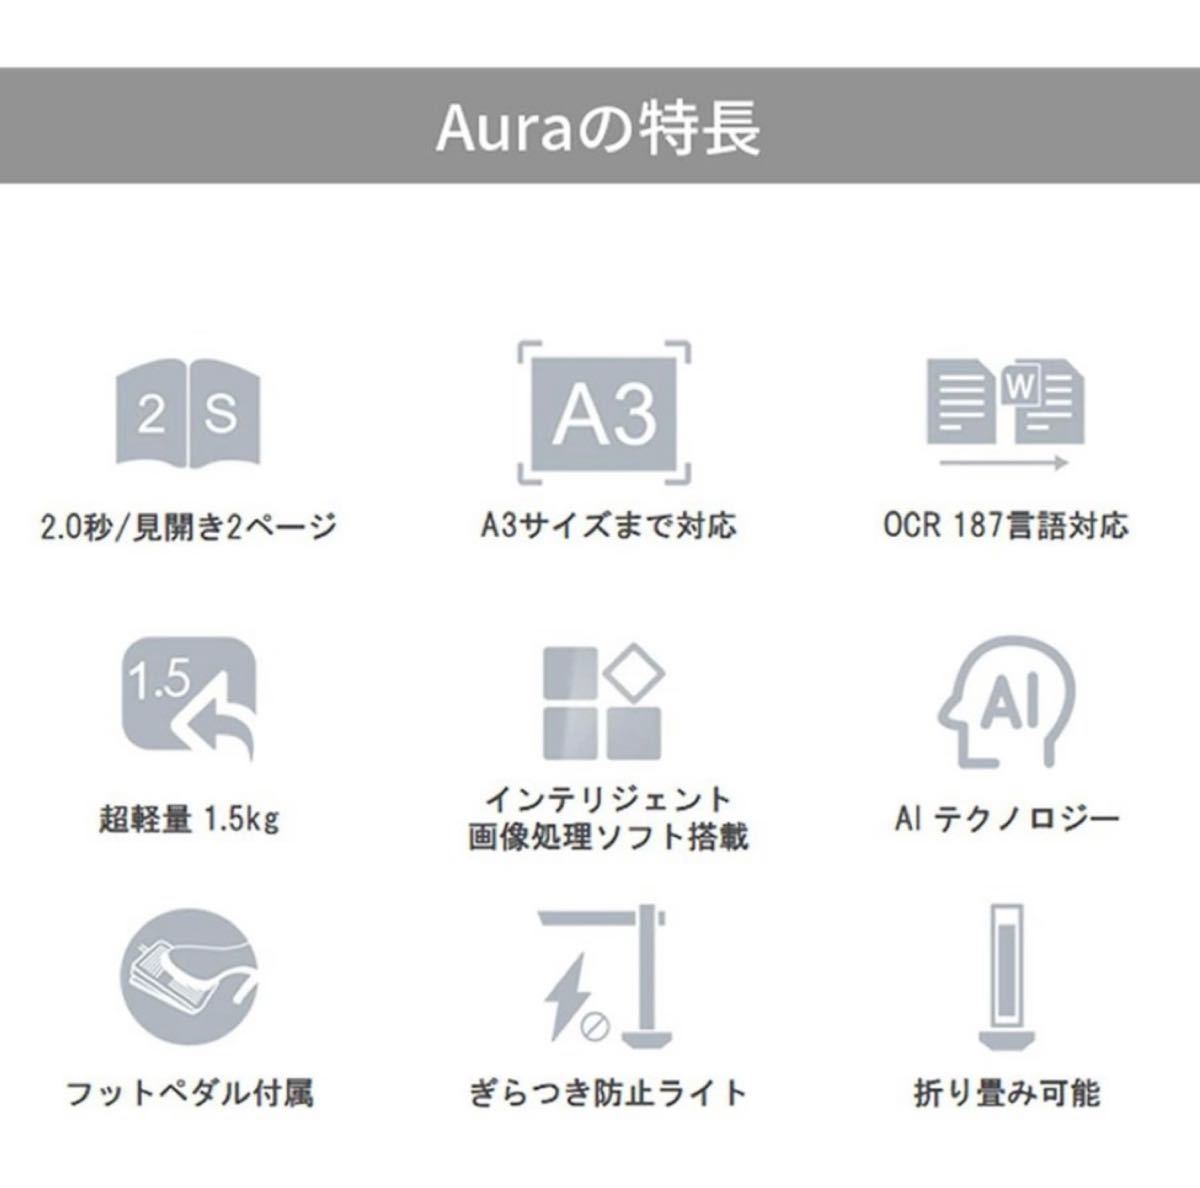 Aura X Pro （バッテリー内蔵モデル）